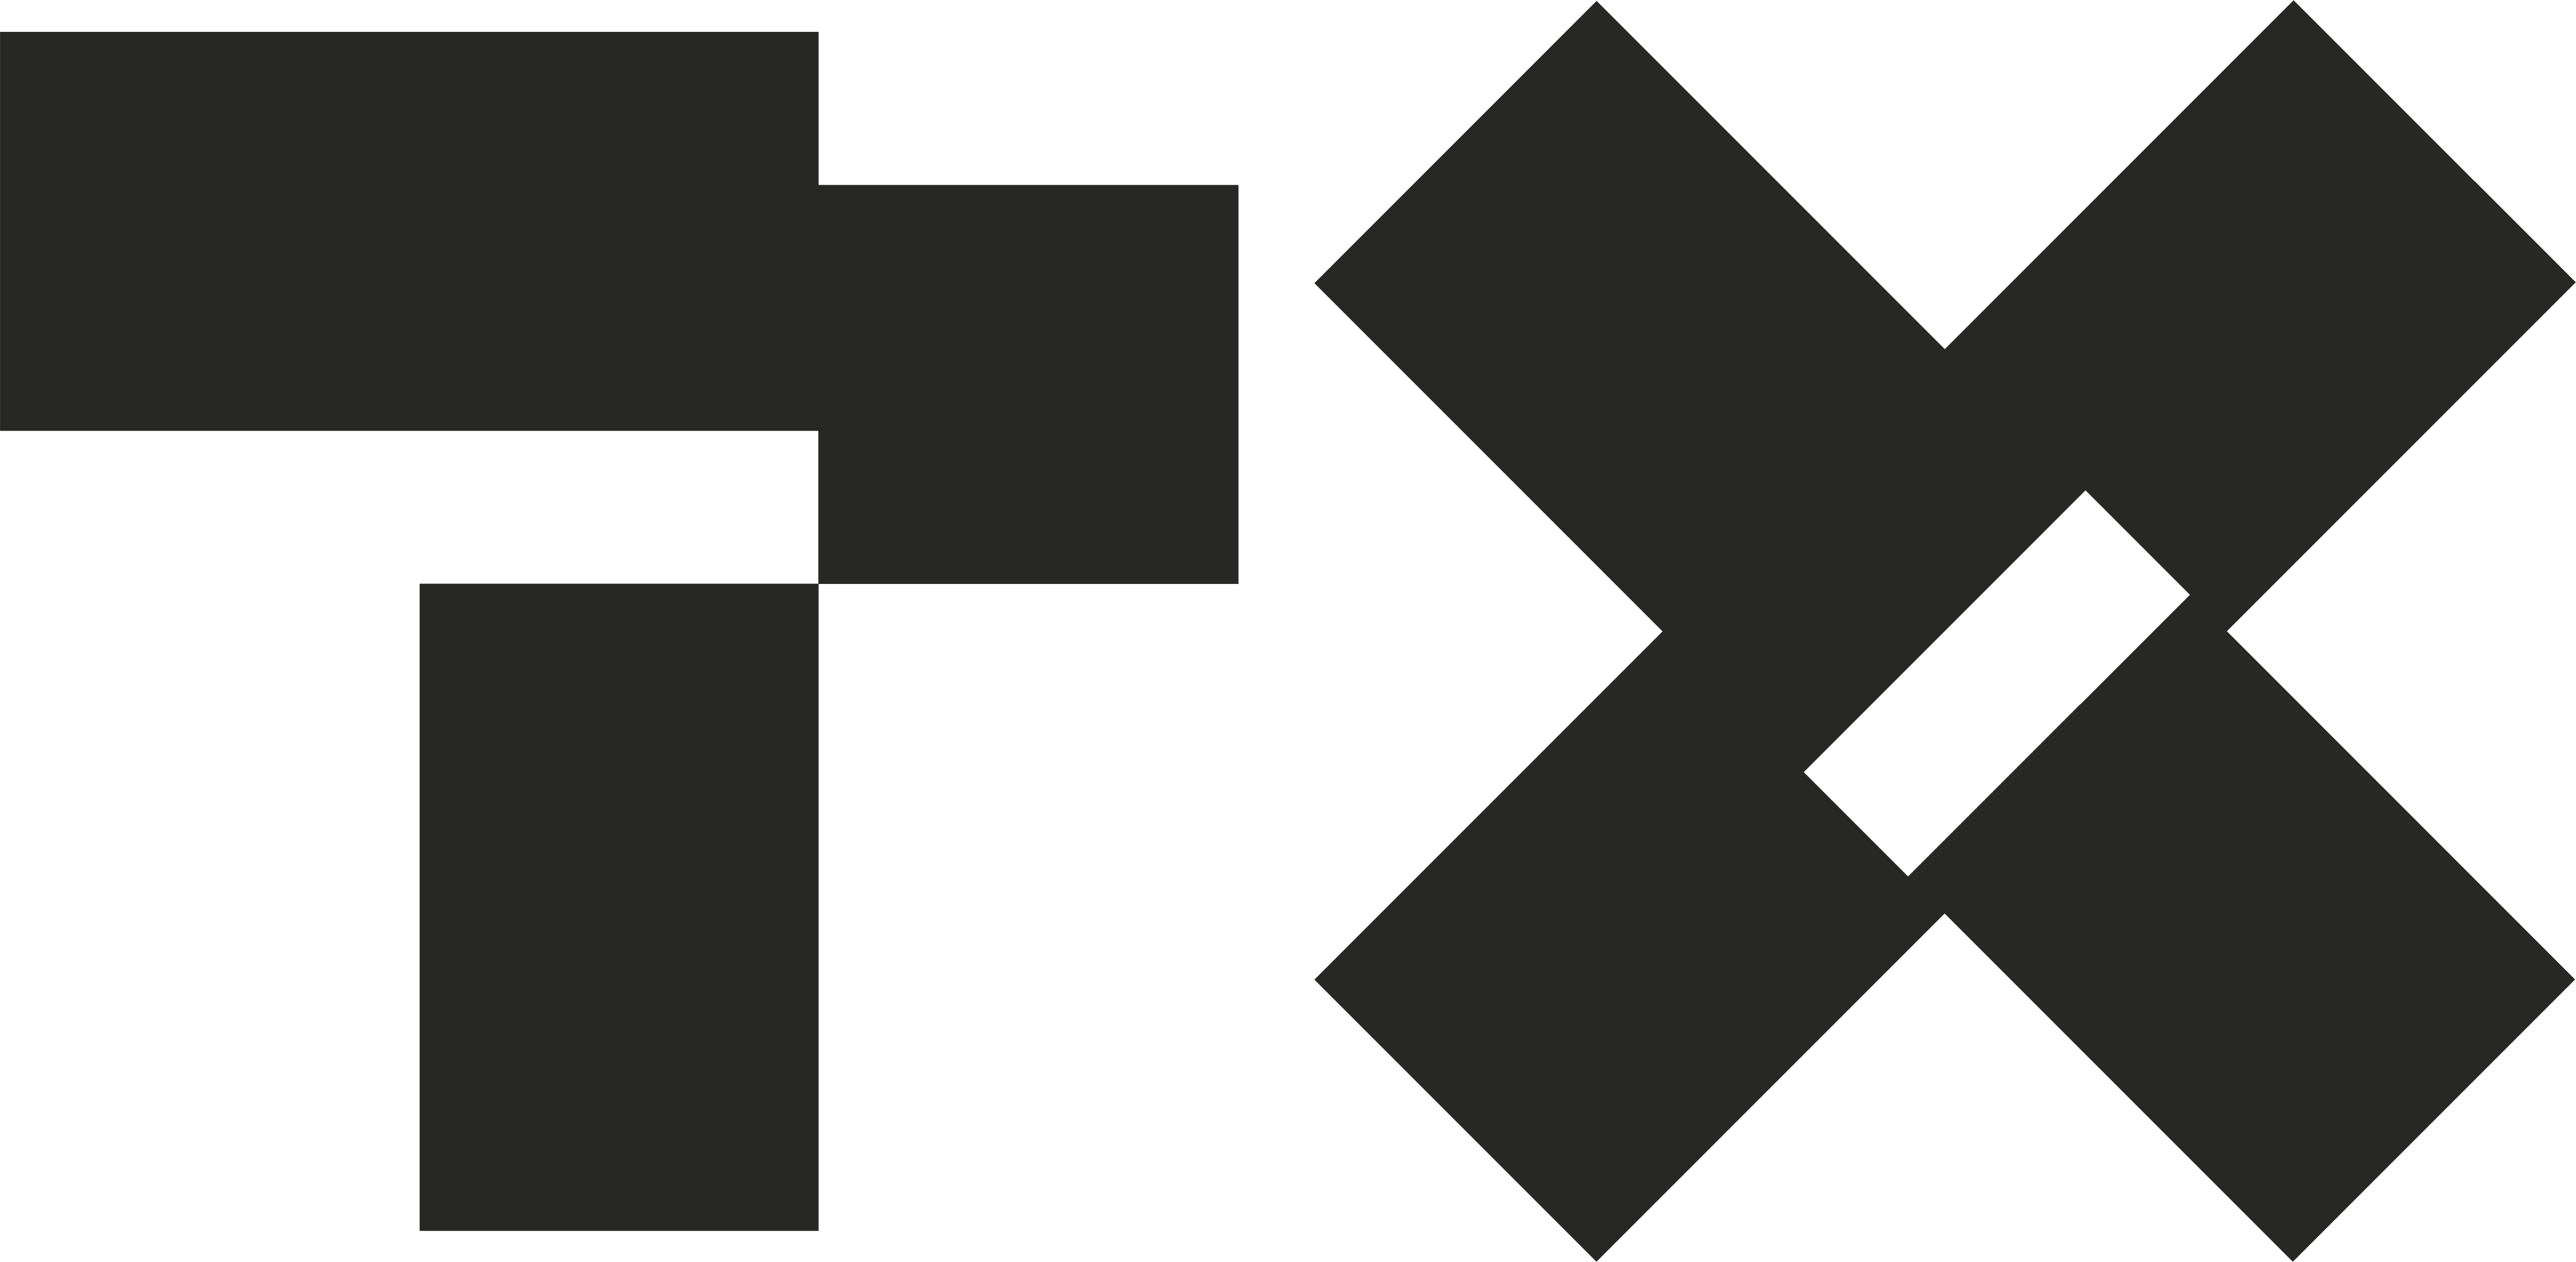 TX Group Logo